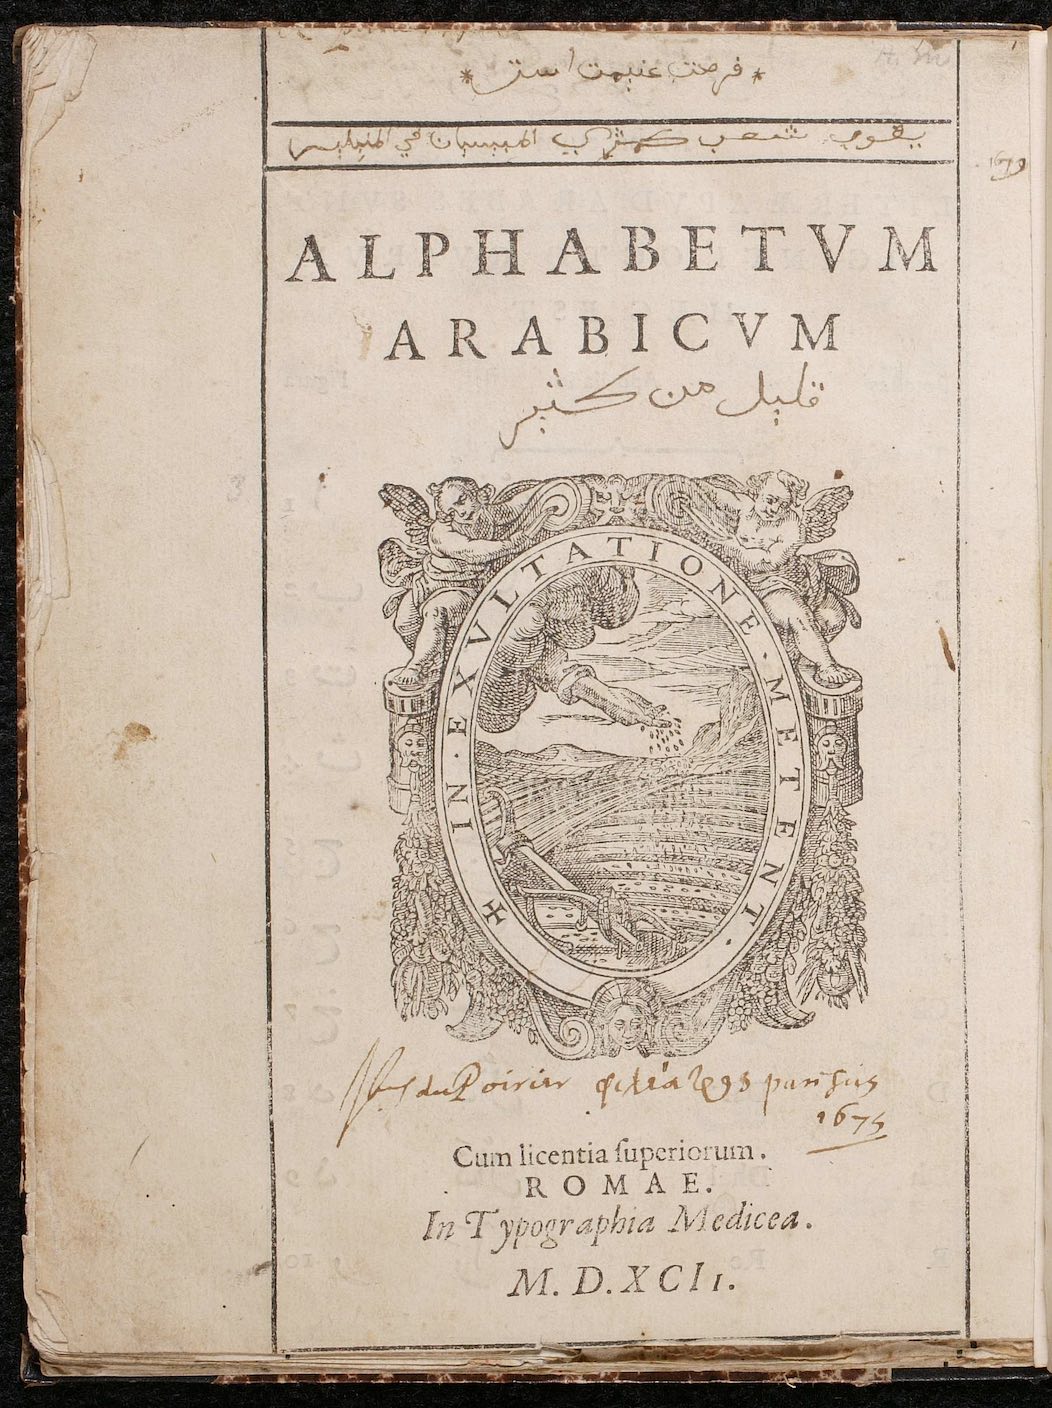 Introduction to Arabic grammar by Giovanni Battista Raimondi [Arabic/Latin]<br>Rome, 1592